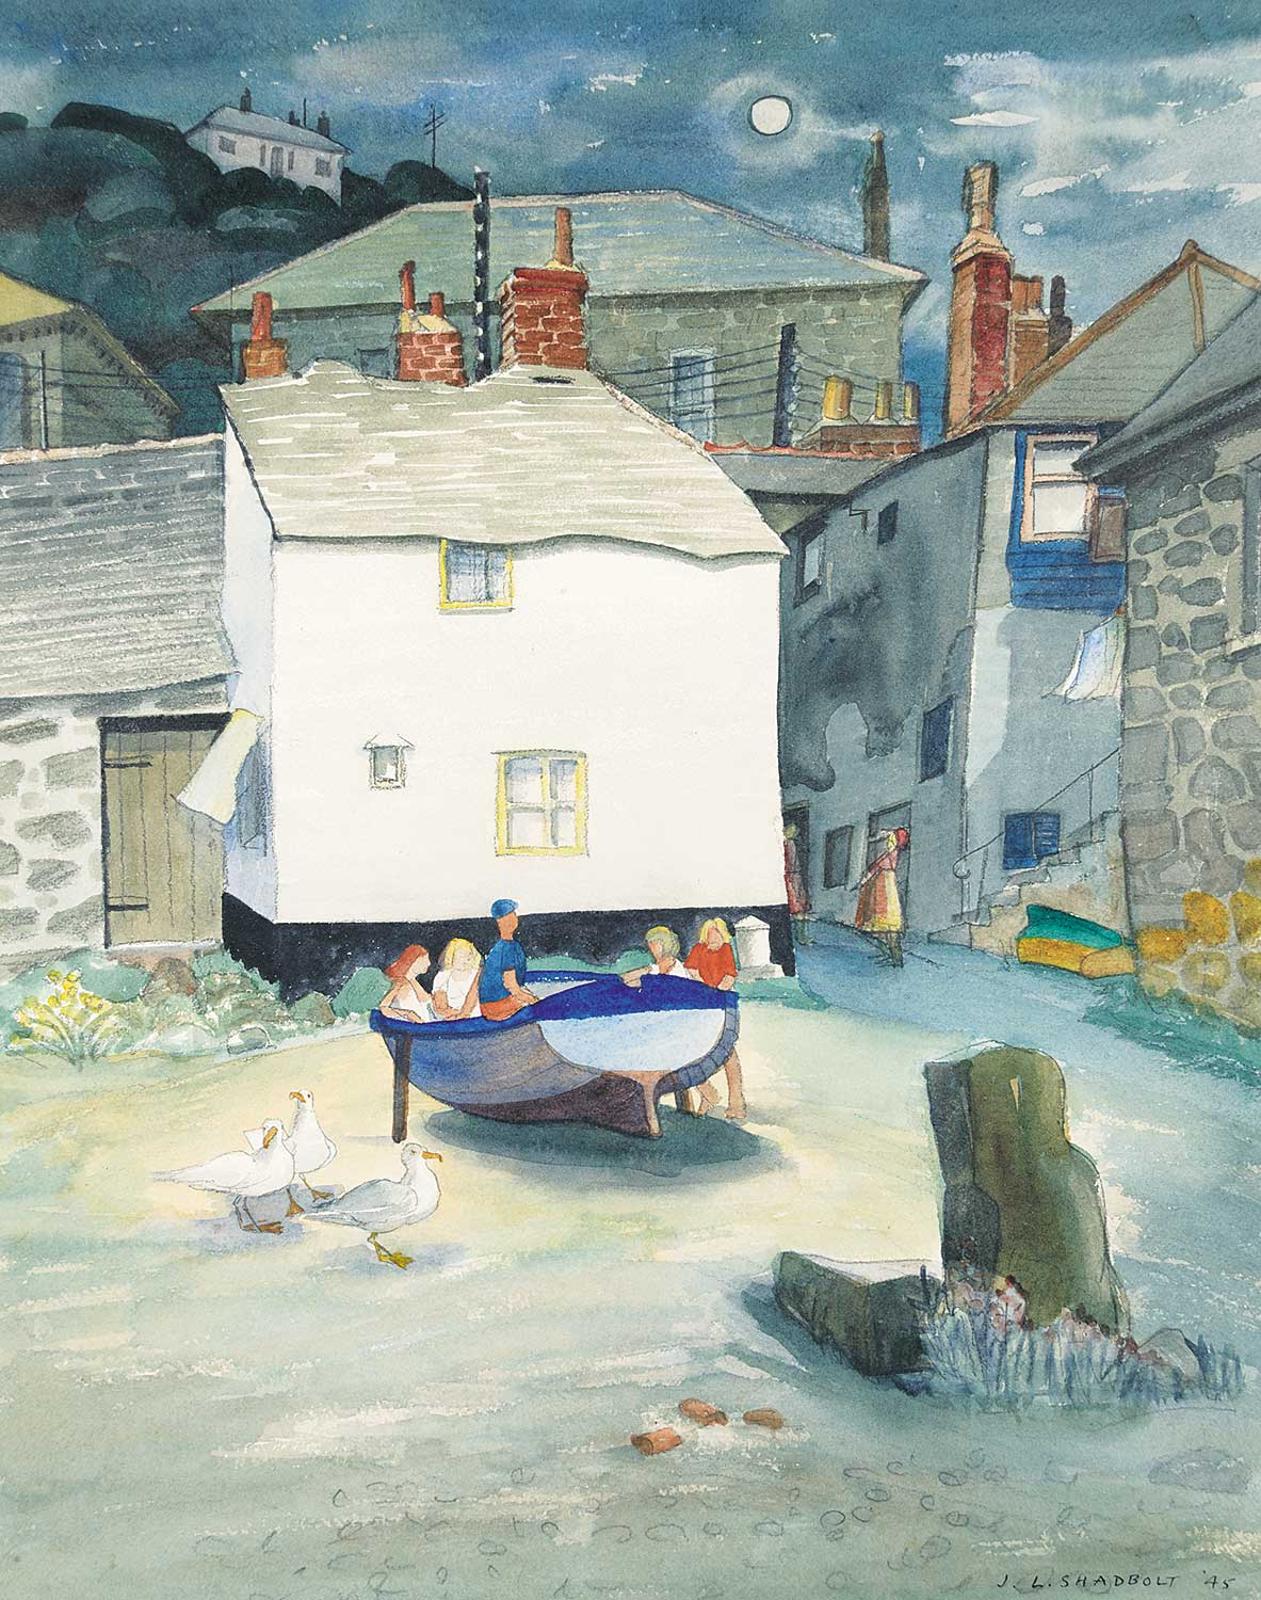 Jack Leaonard Shadbolt (1909-1998) - Untitled - English Village, 1945